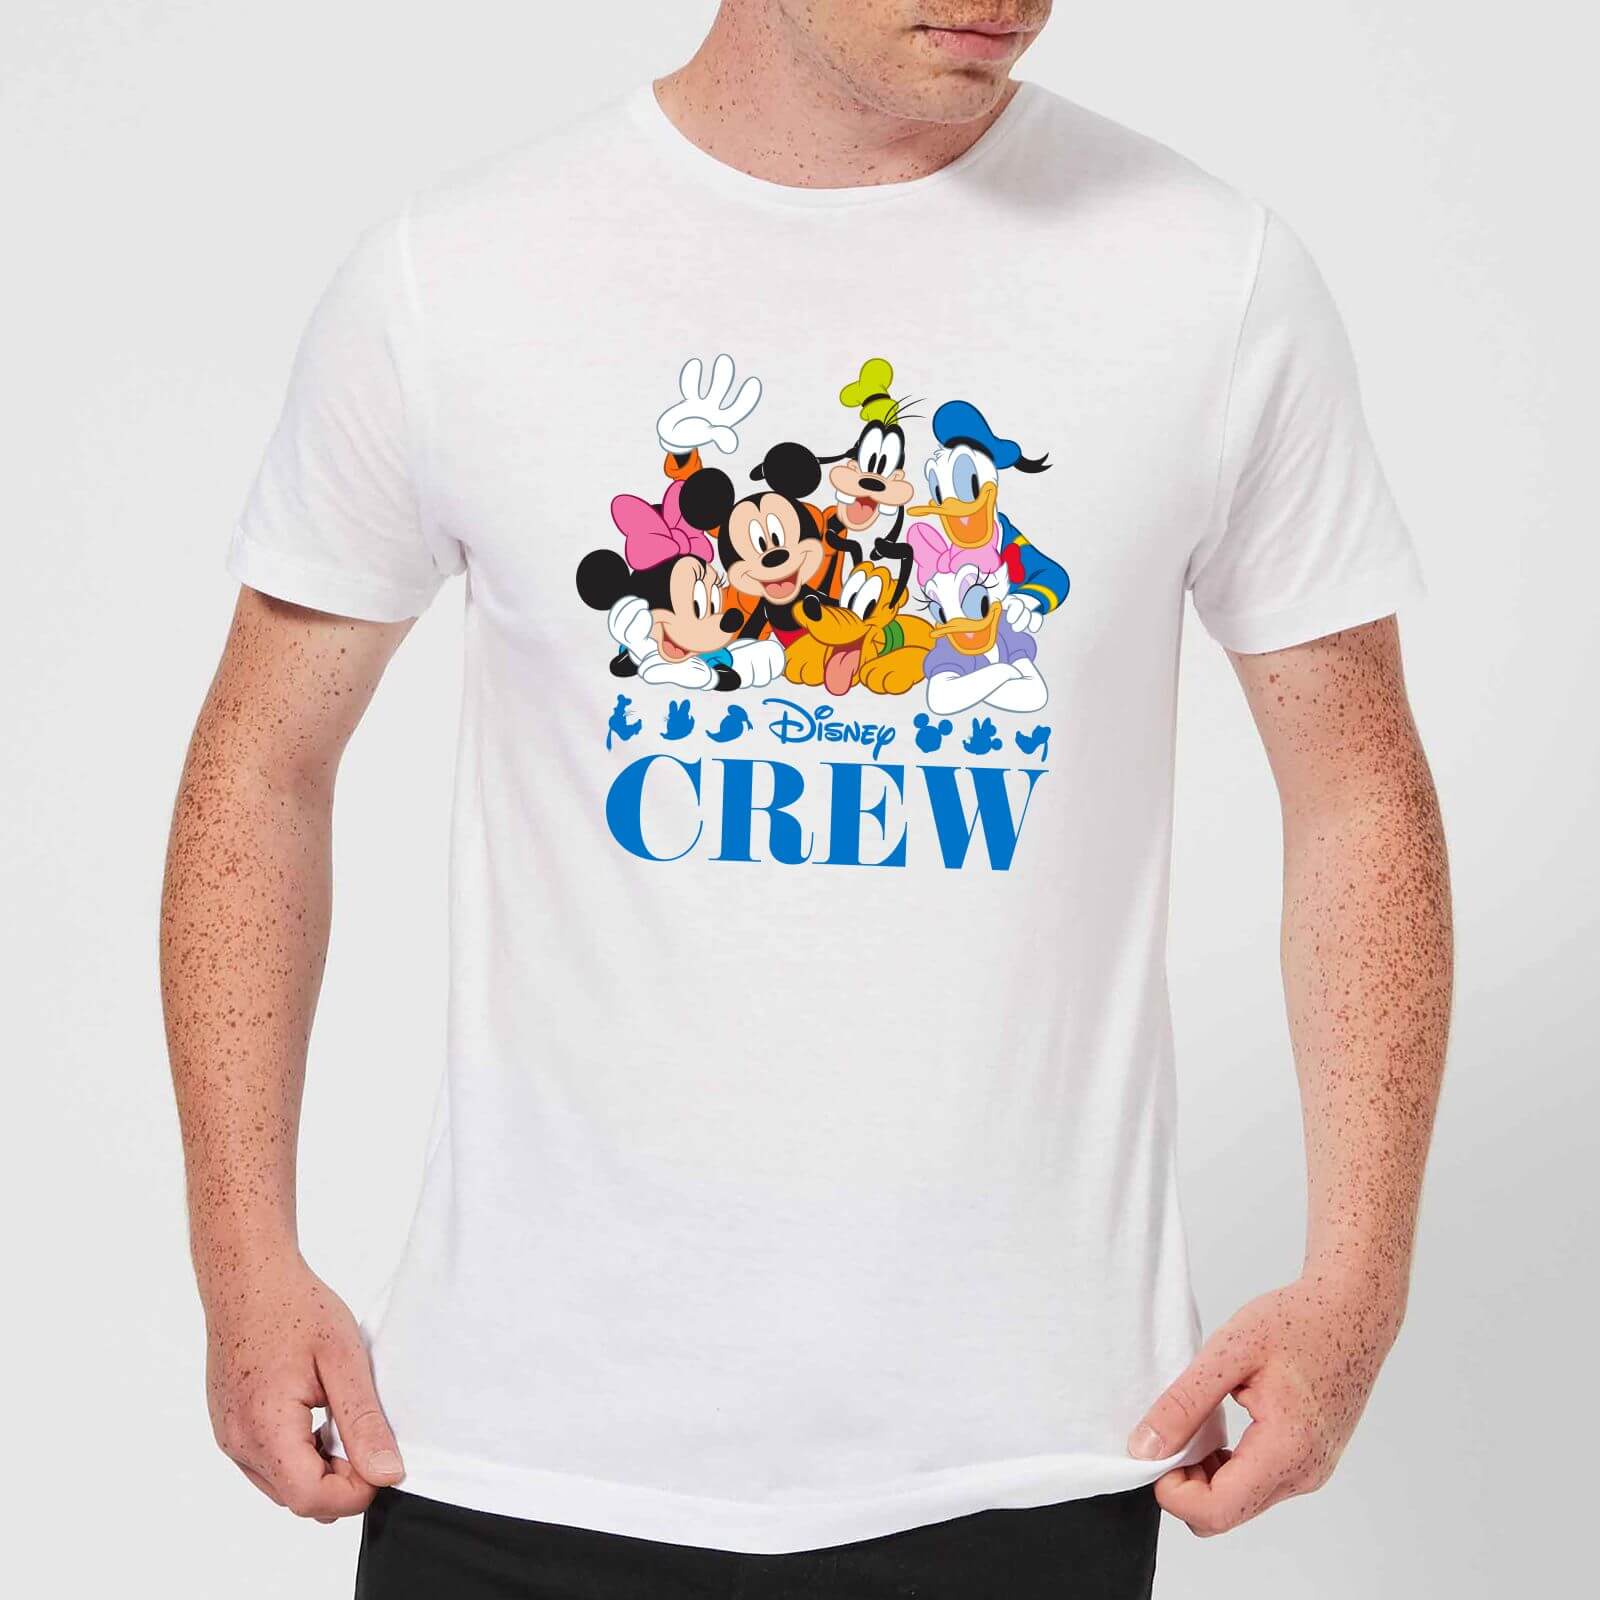 Disney Crew Men's T-Shirt - White - S